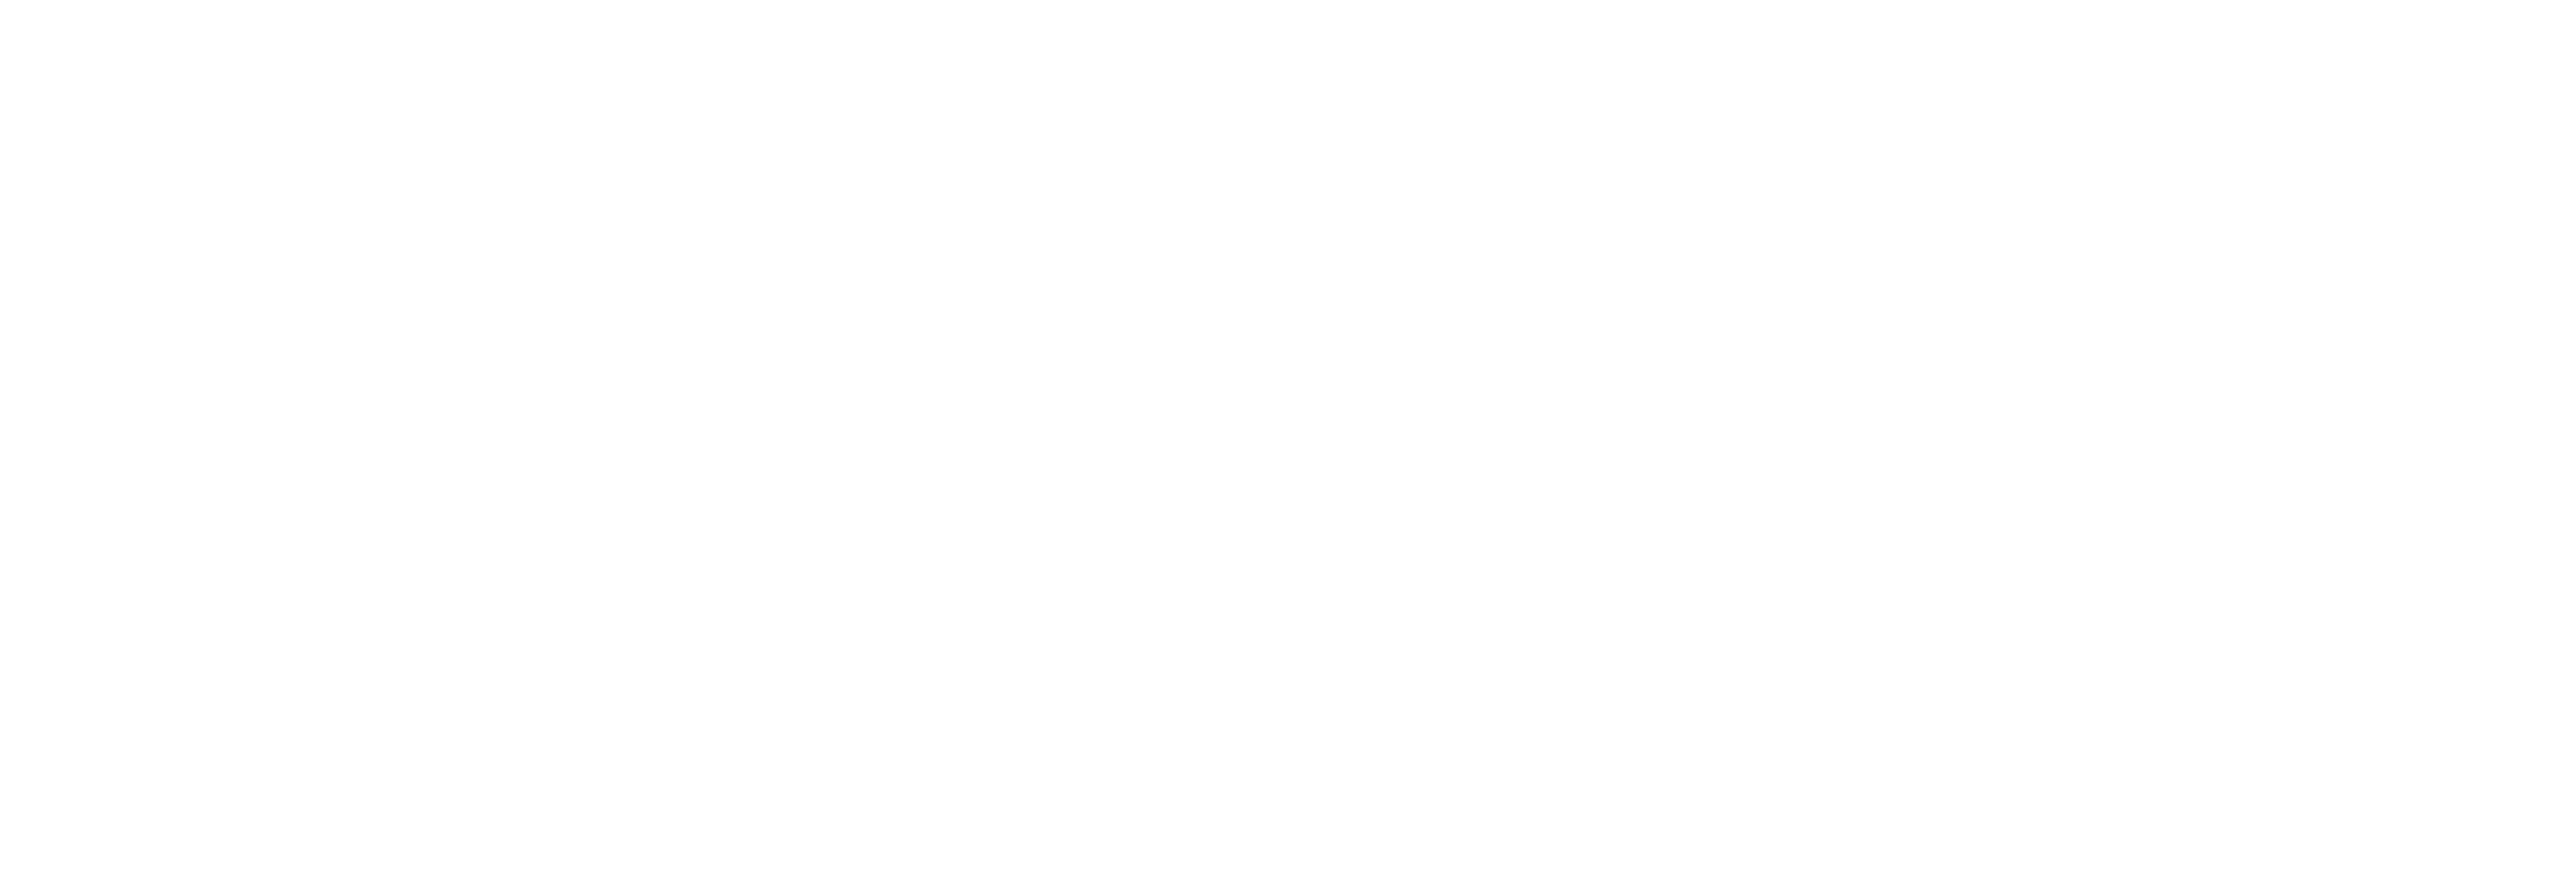 AniCura Roelofarendsveen logo